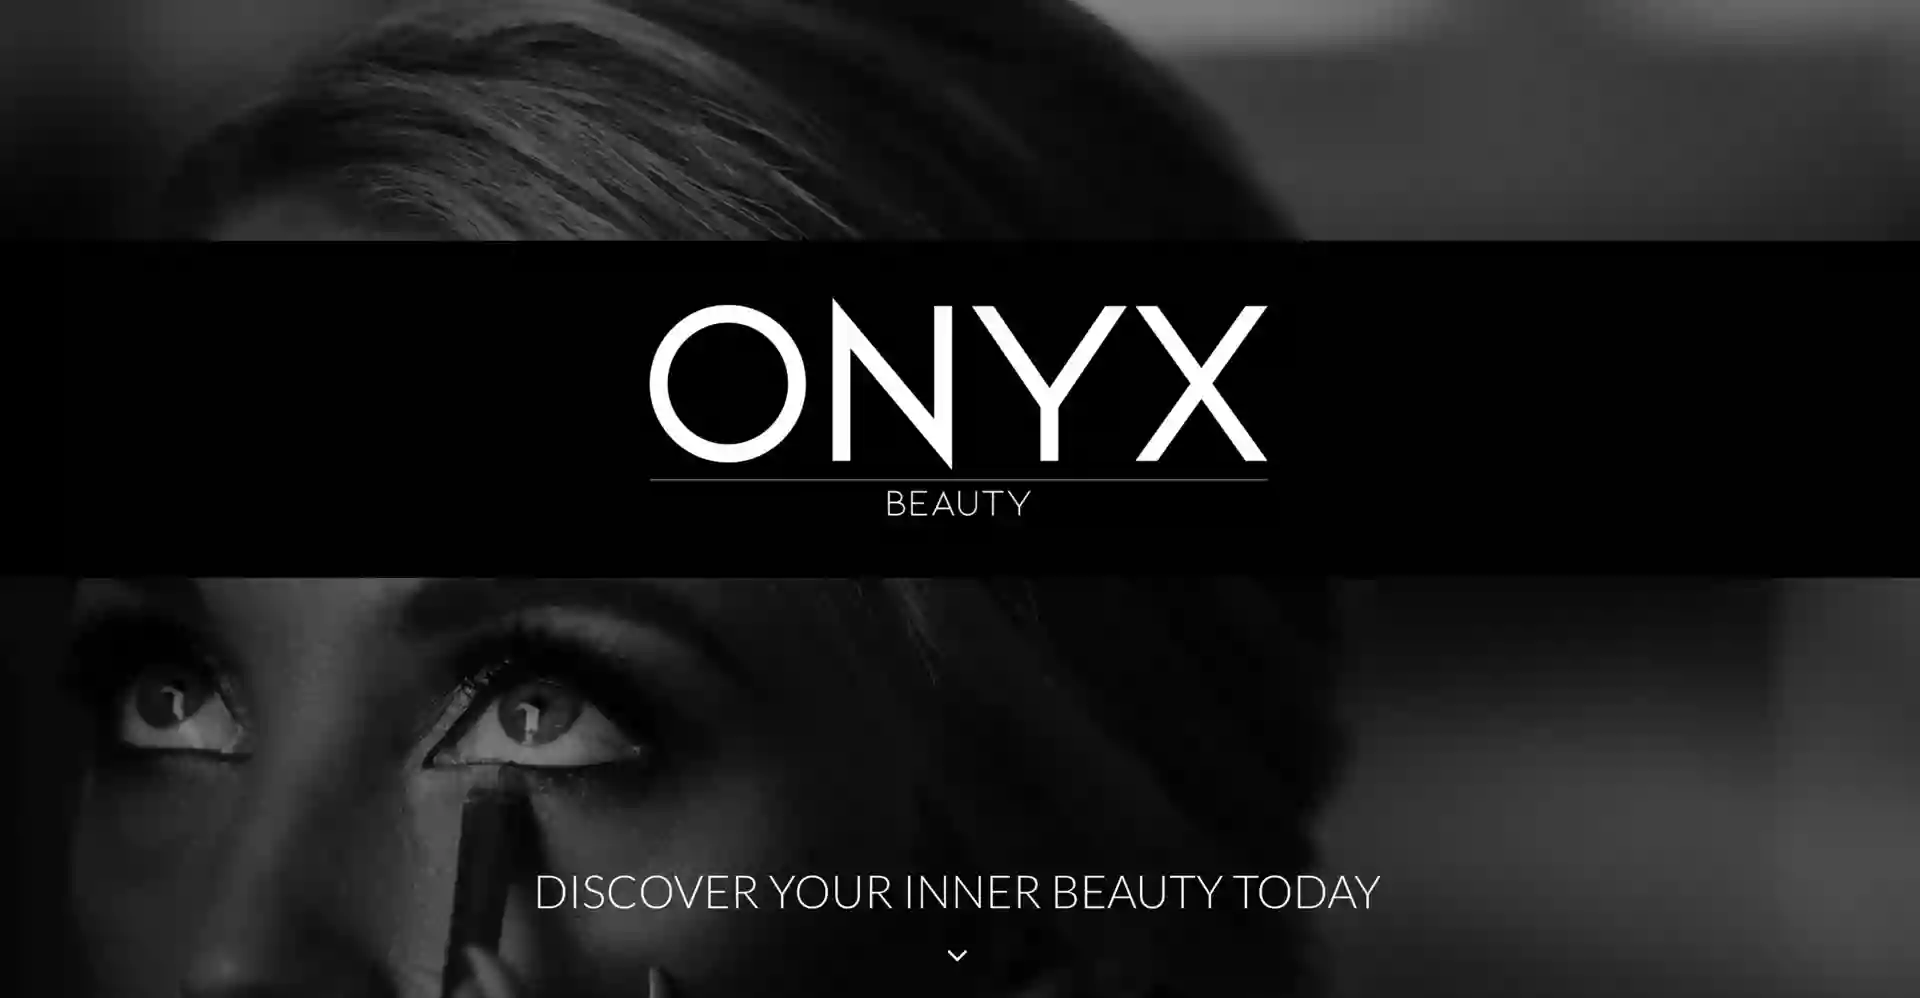 ONYX Beauty